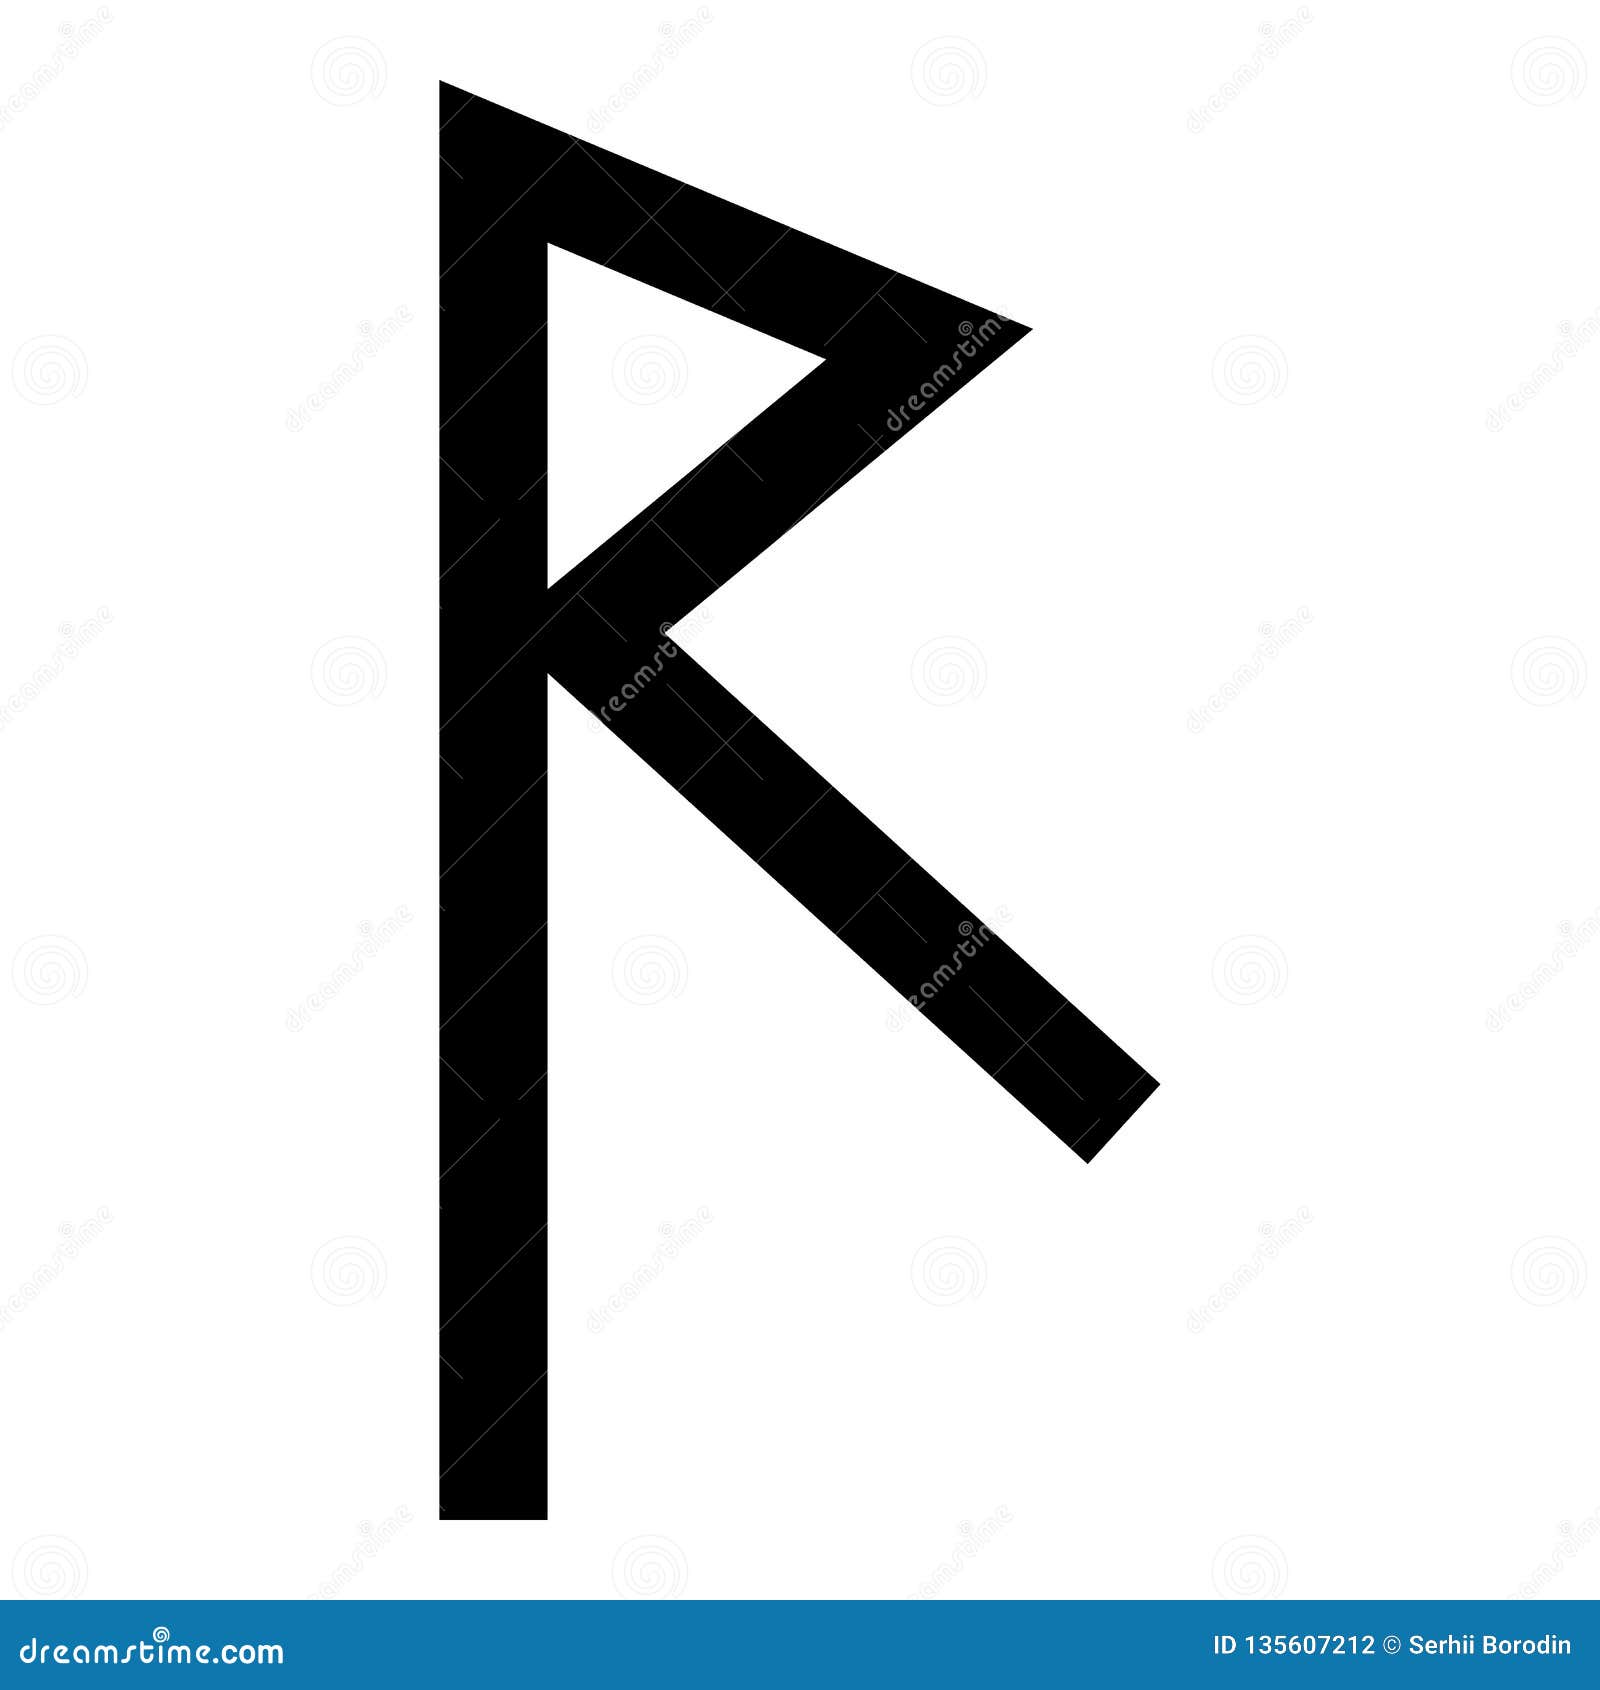 raido rune raid  road icon black color   flat style image